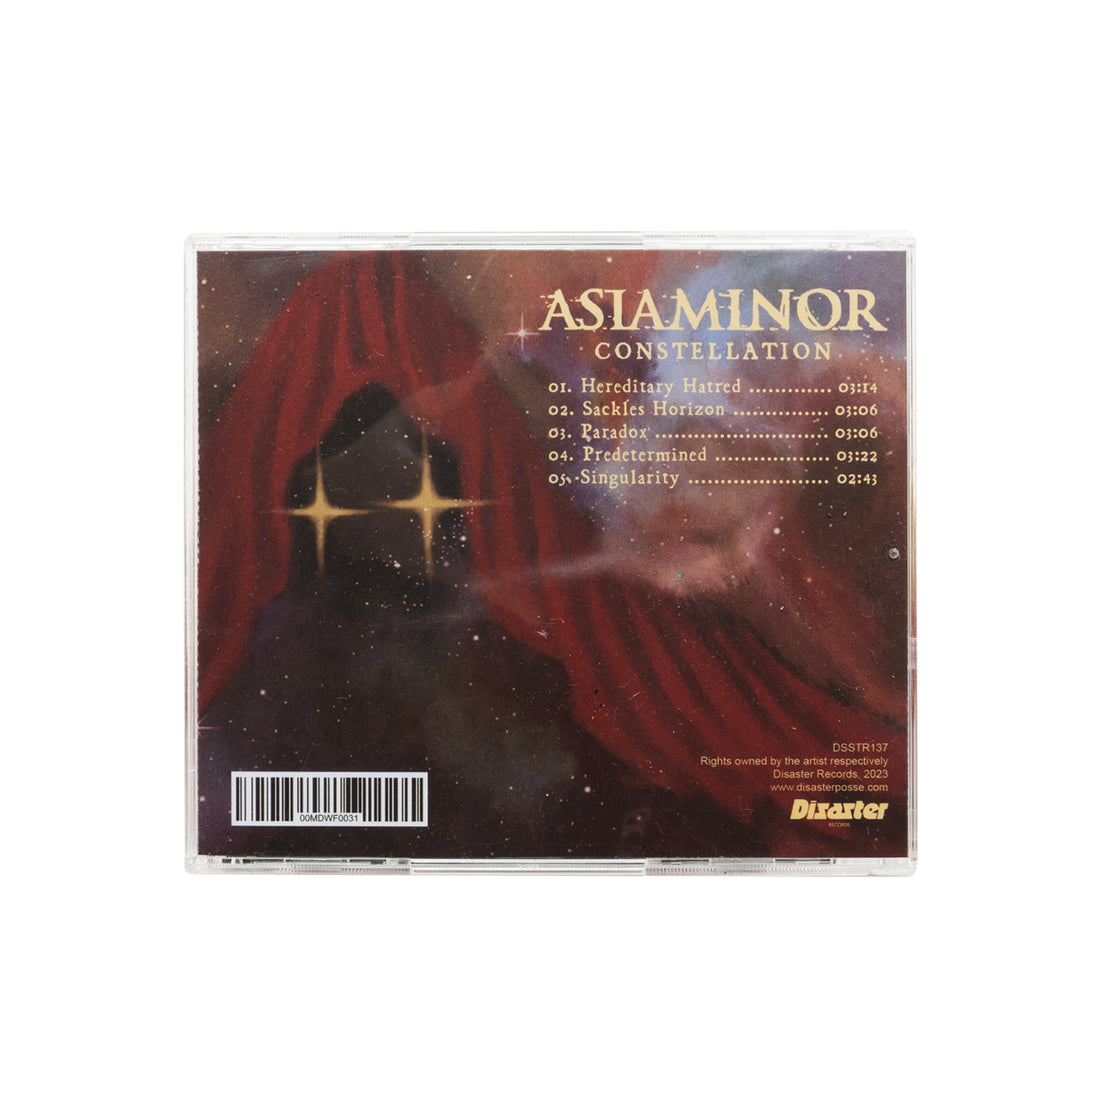 ASIAMINOR - CONSTELLATION EP CDs